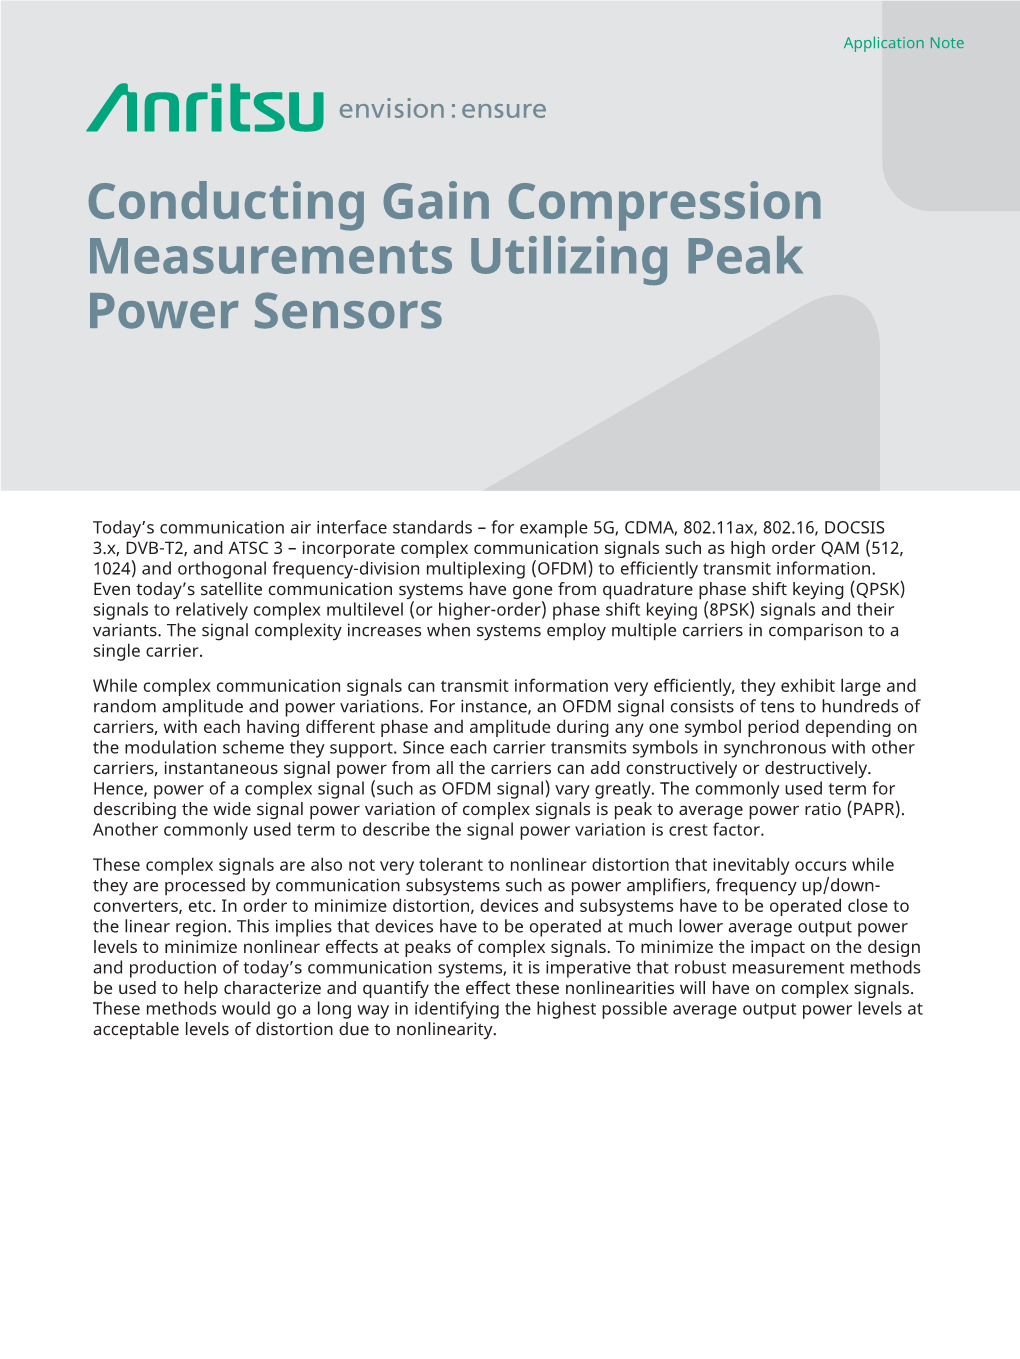 Conducting Gain Compression Measurements Utilizing Peak Power Sensors